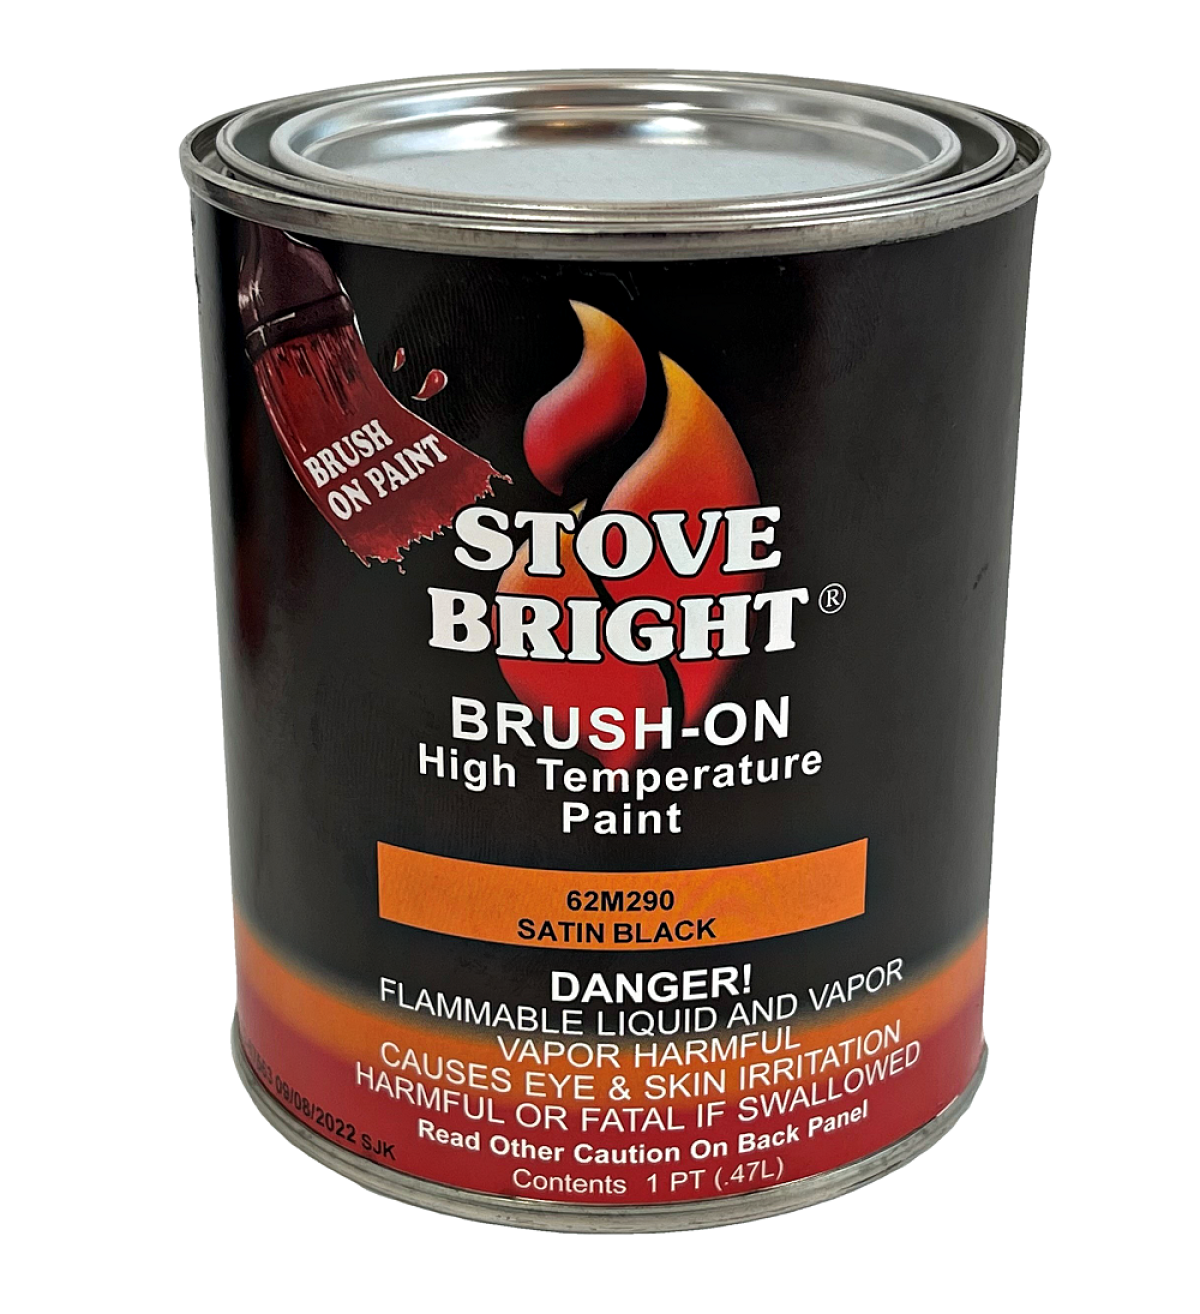 Stove Bright High Temp Satin Black Brush-On Paint, 62M290